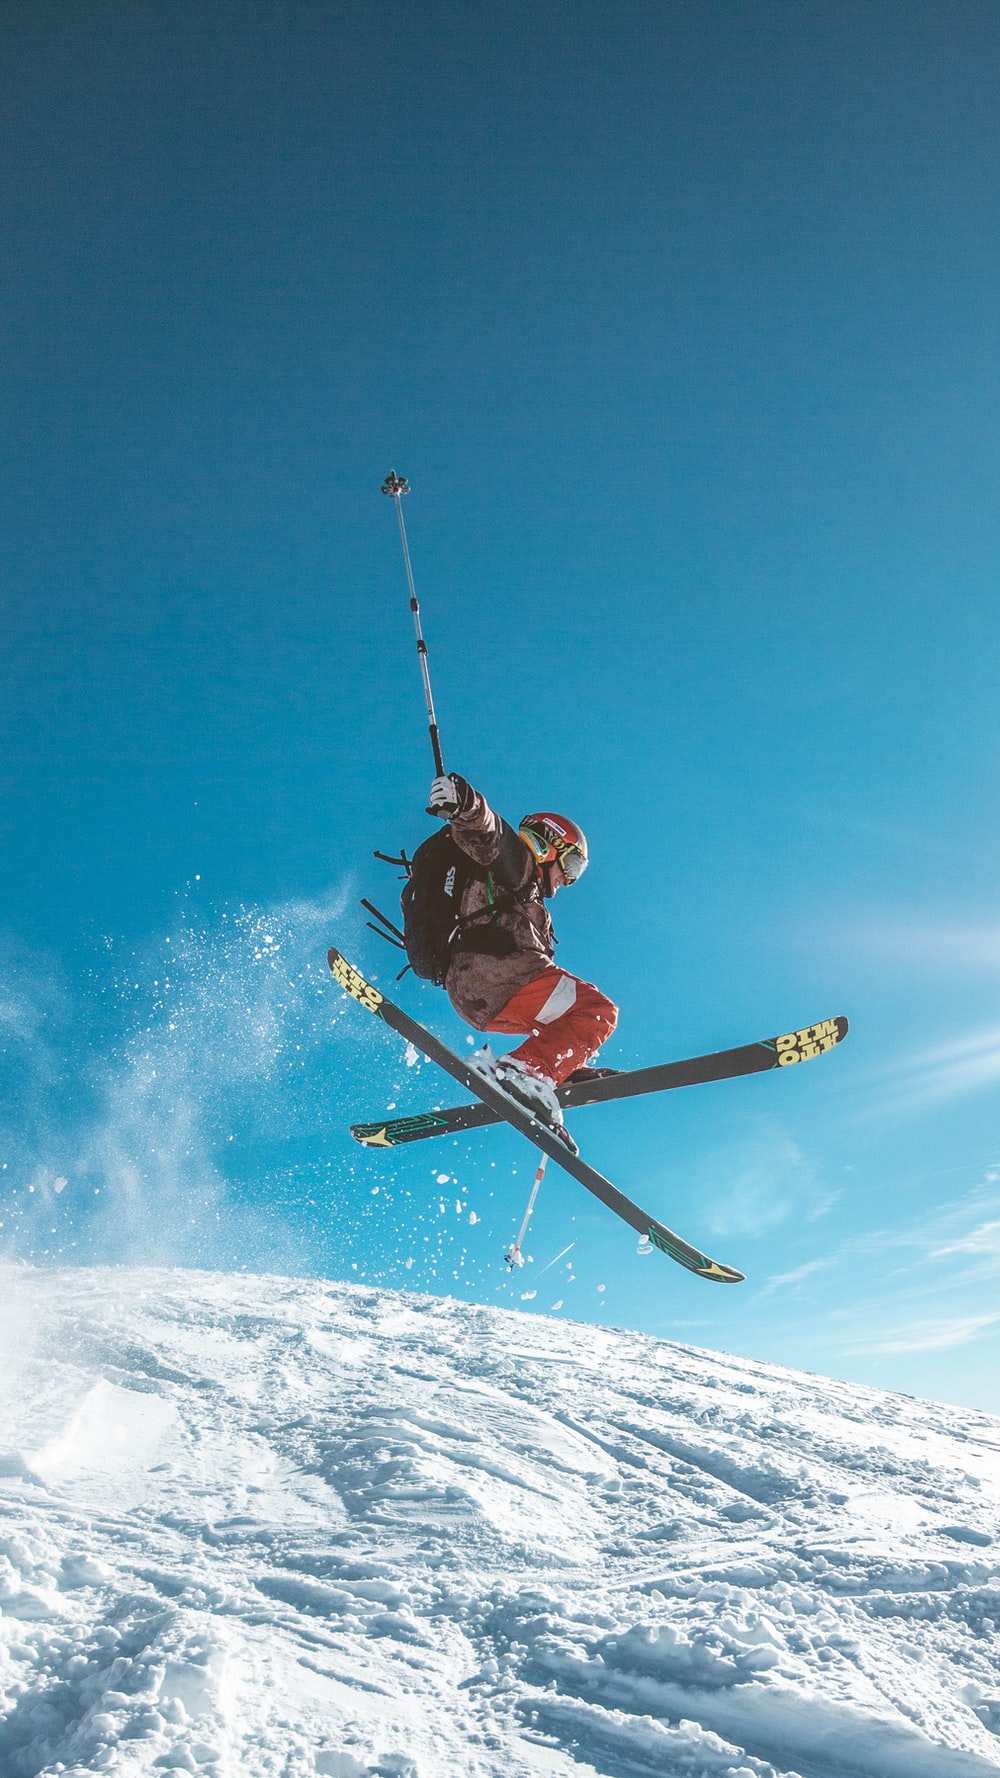 Free Download Ski Racing Wallpapers Top Ski Racing Backgrounds